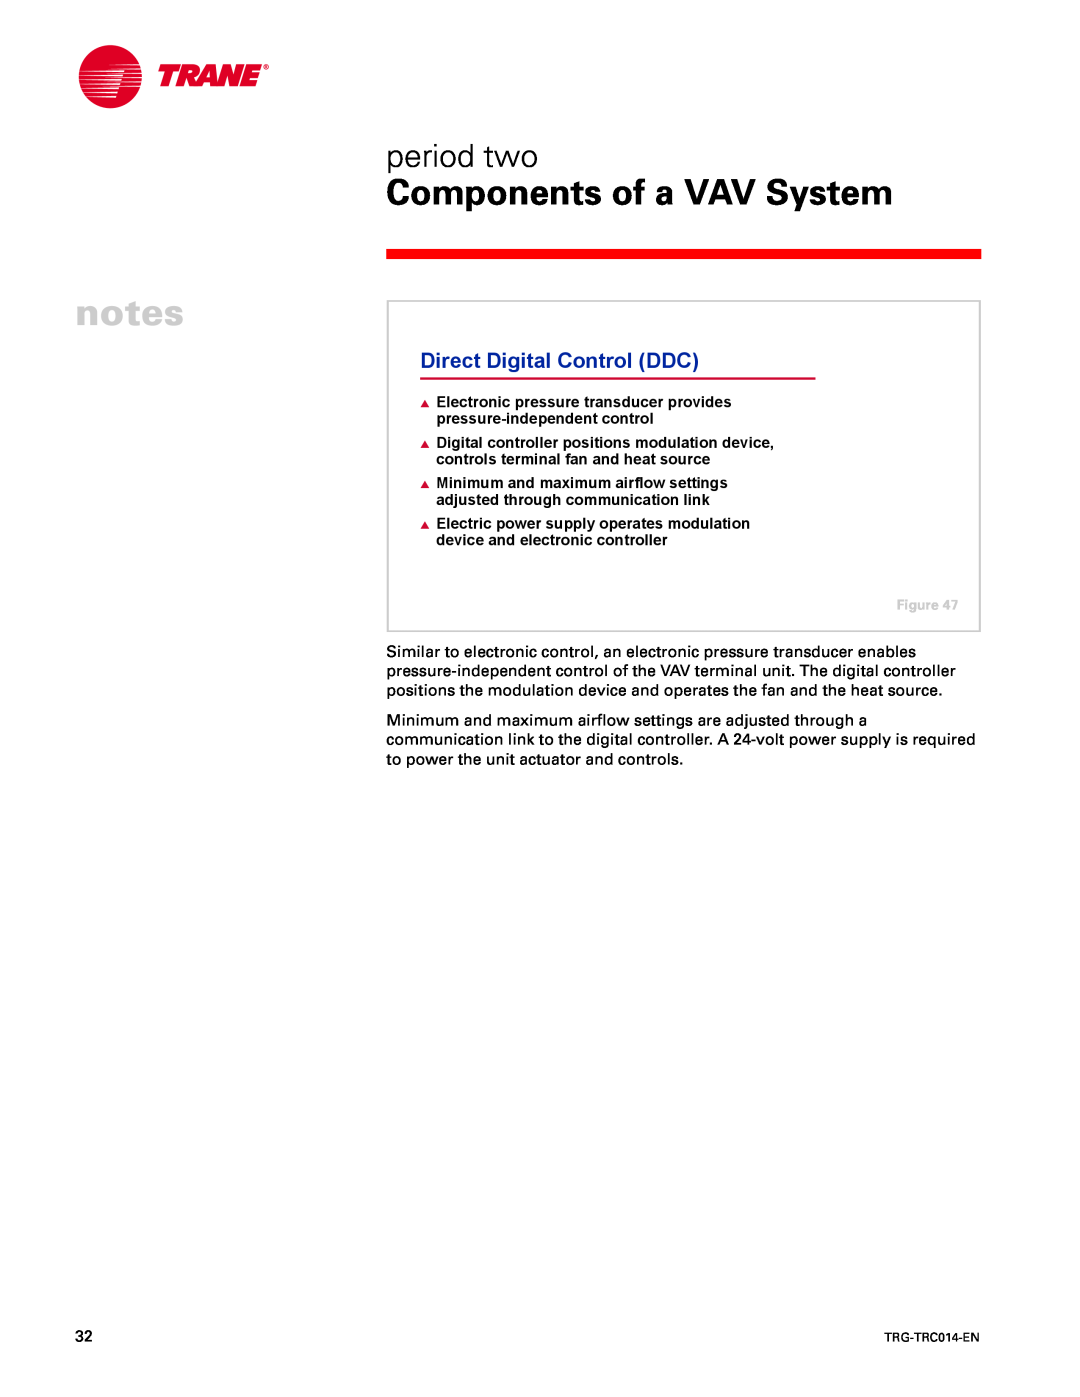 Trane TRG-TRC014-EN manual Components of a VAV System, period two, Direct Digital Control DDC 